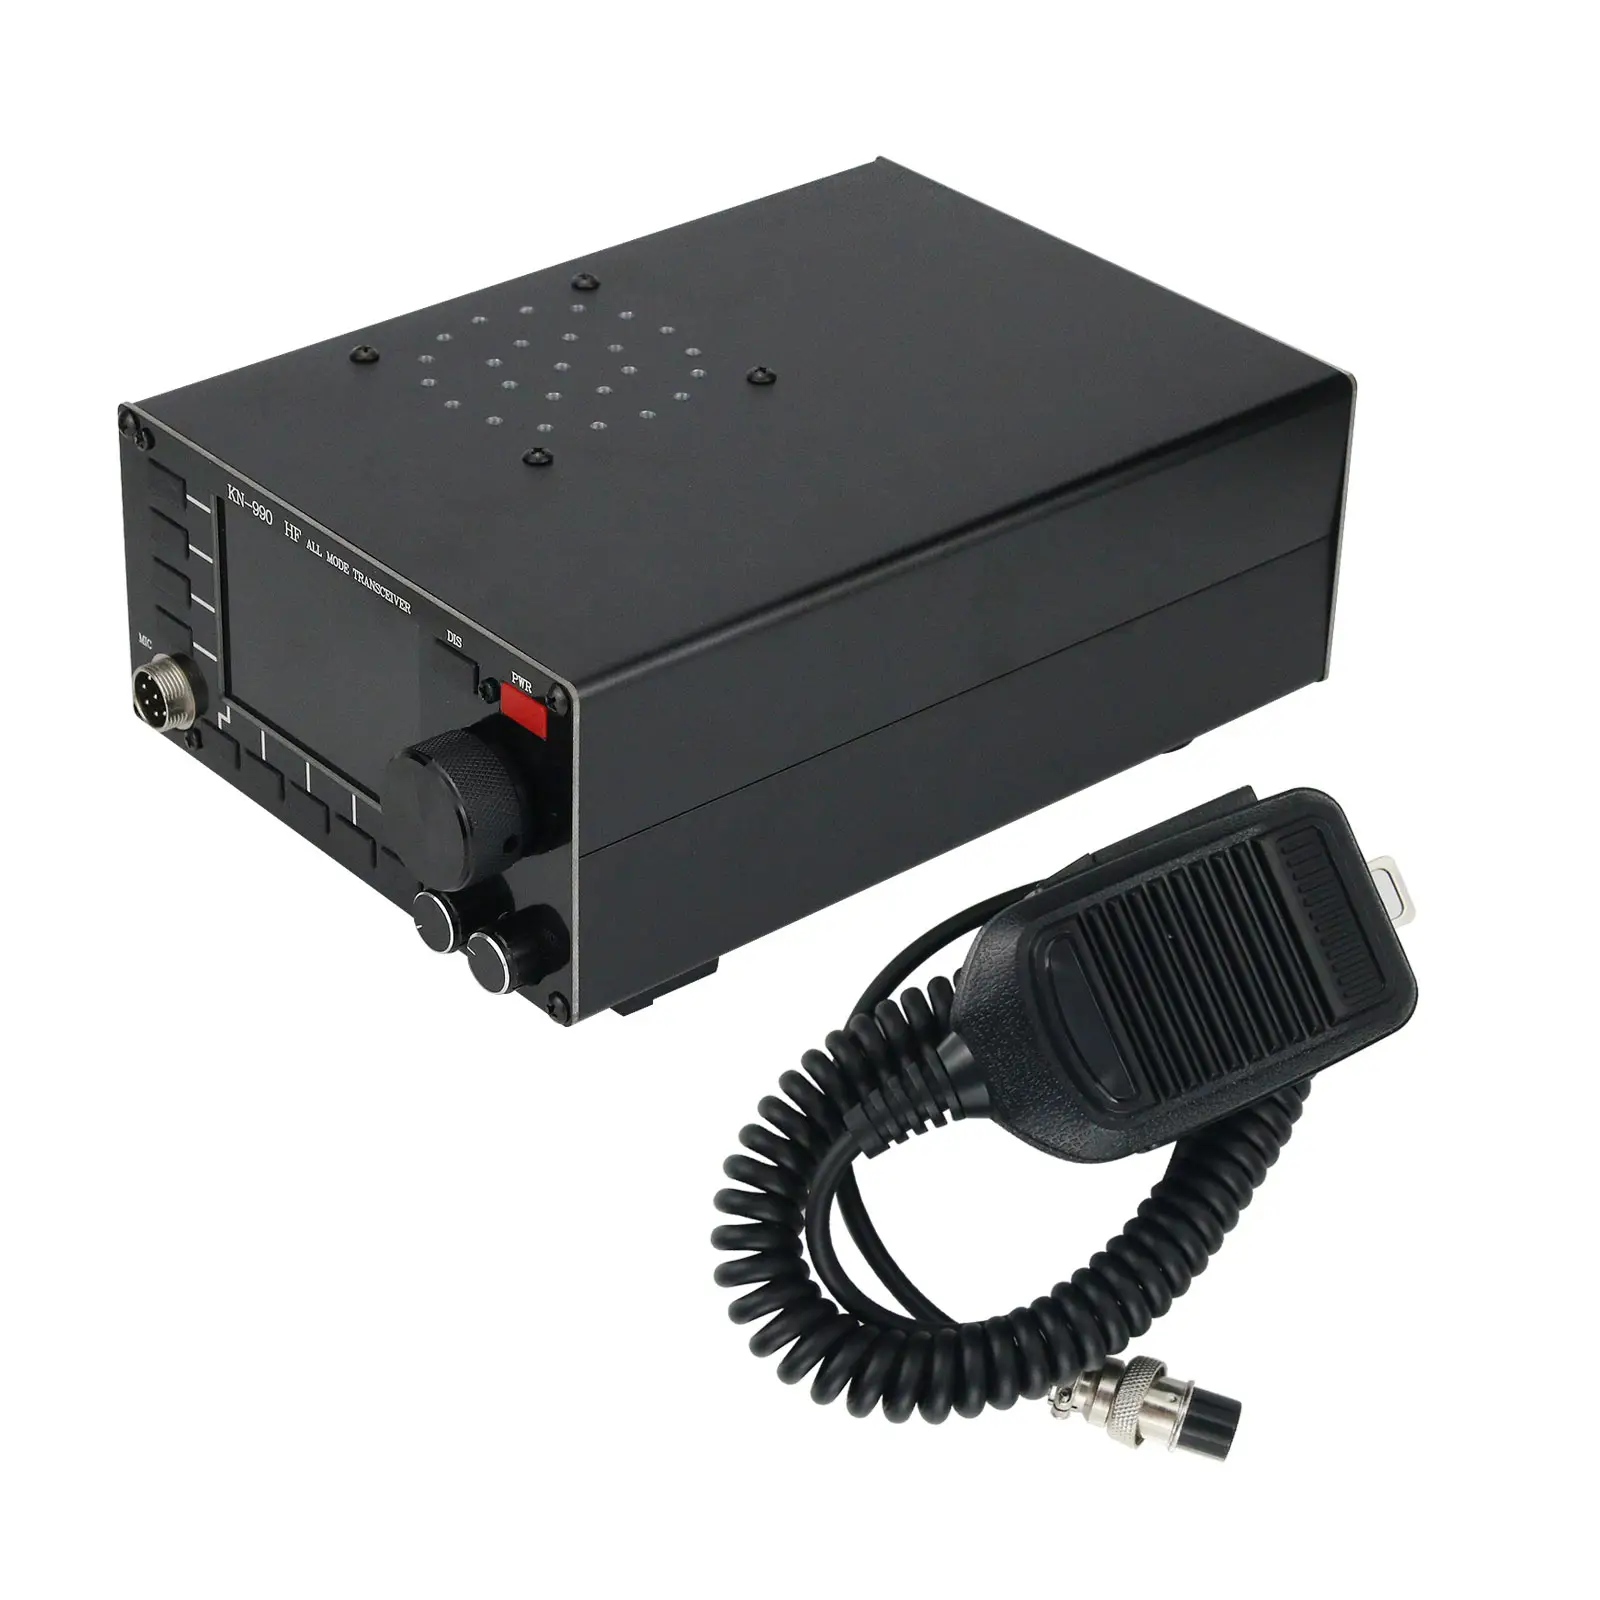 KN990 HF All Mode Receiver Transmitter SSB/CW/AM/FM/DIGITAL Working Modes Shortwave Transceiver